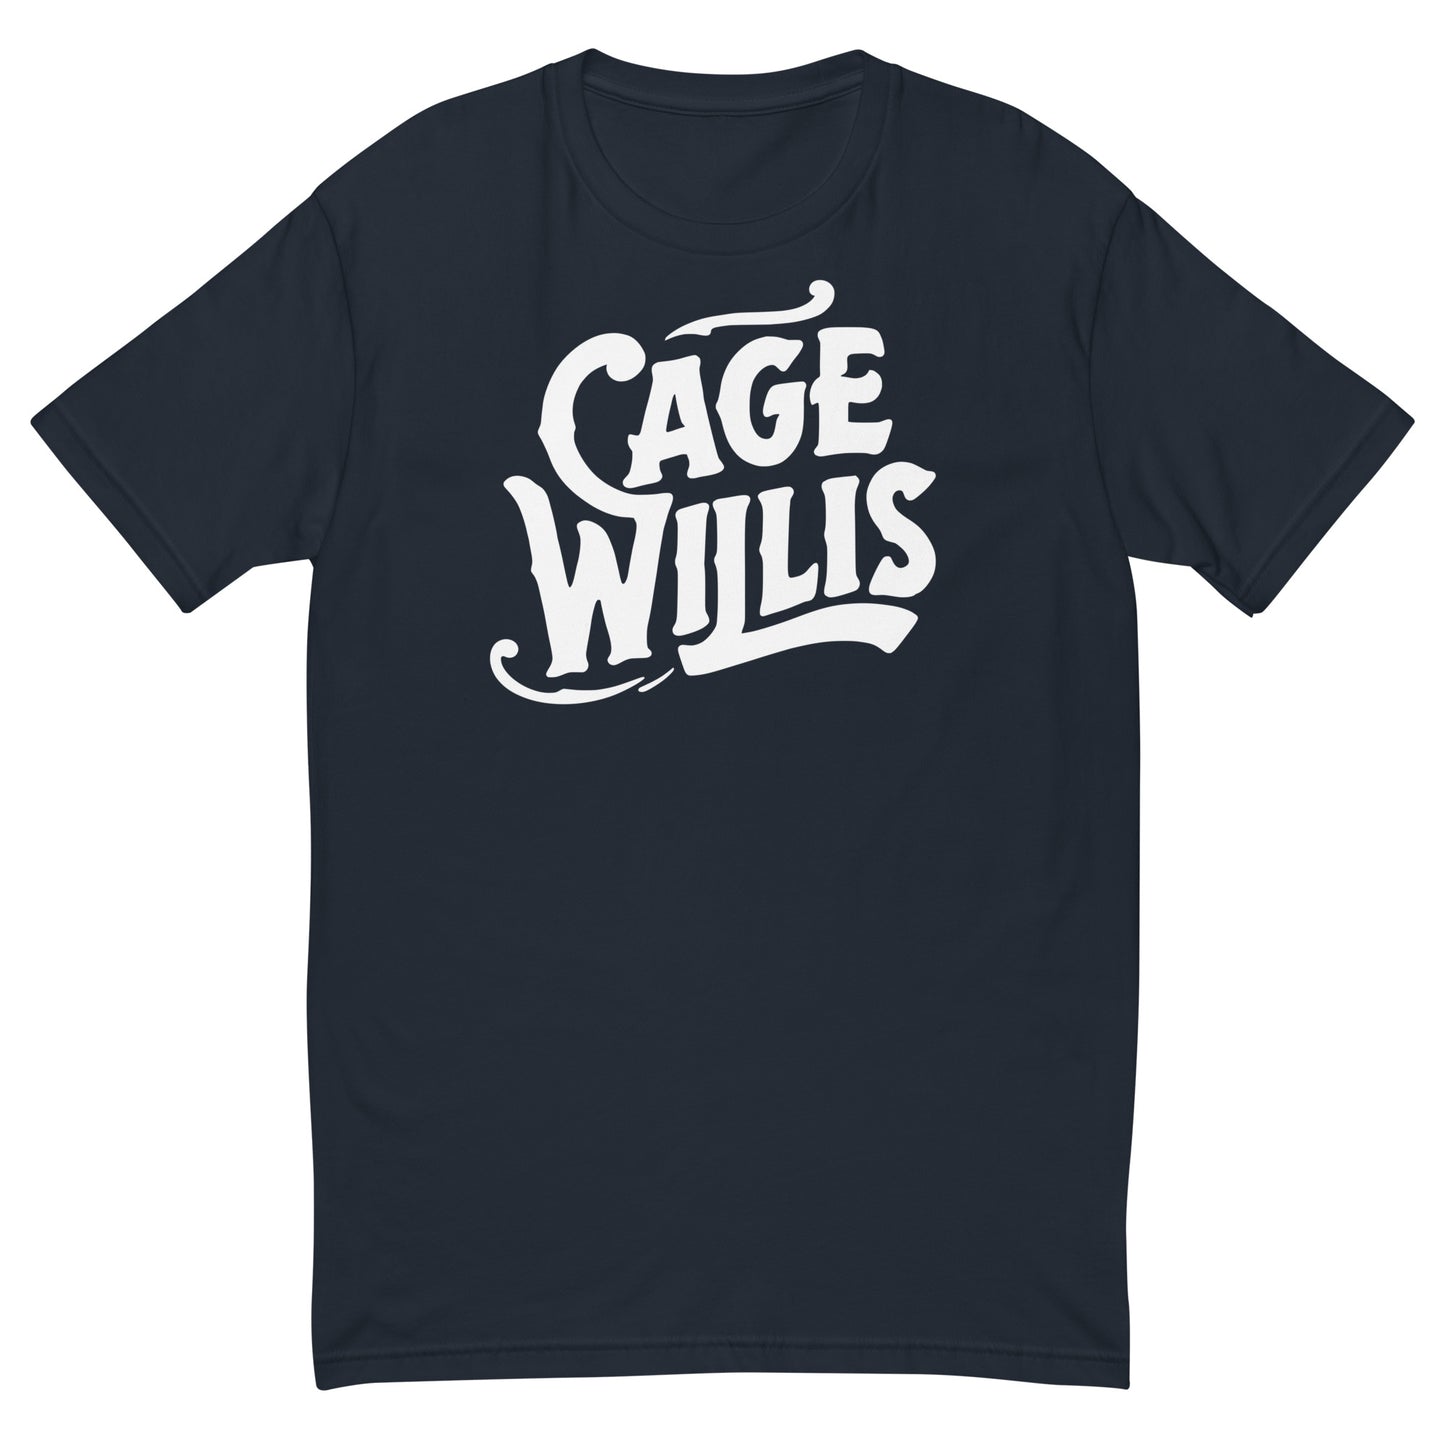 Cage Willis Tee